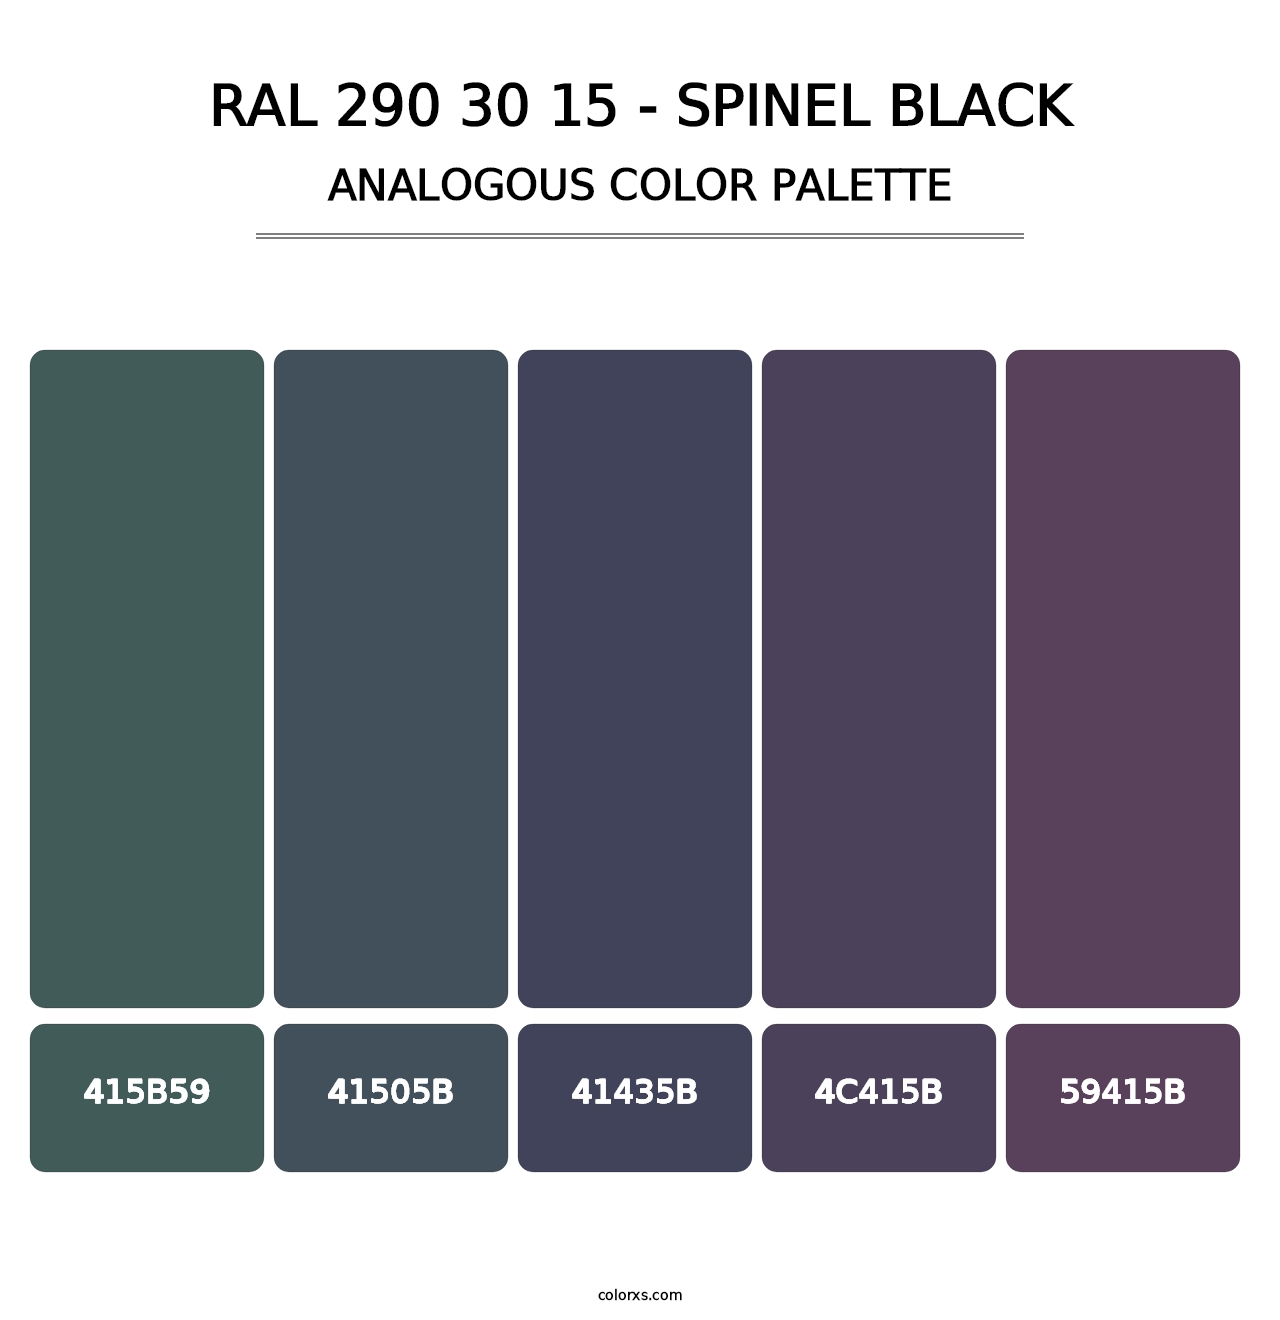 RAL 290 30 15 - Spinel Black - Analogous Color Palette